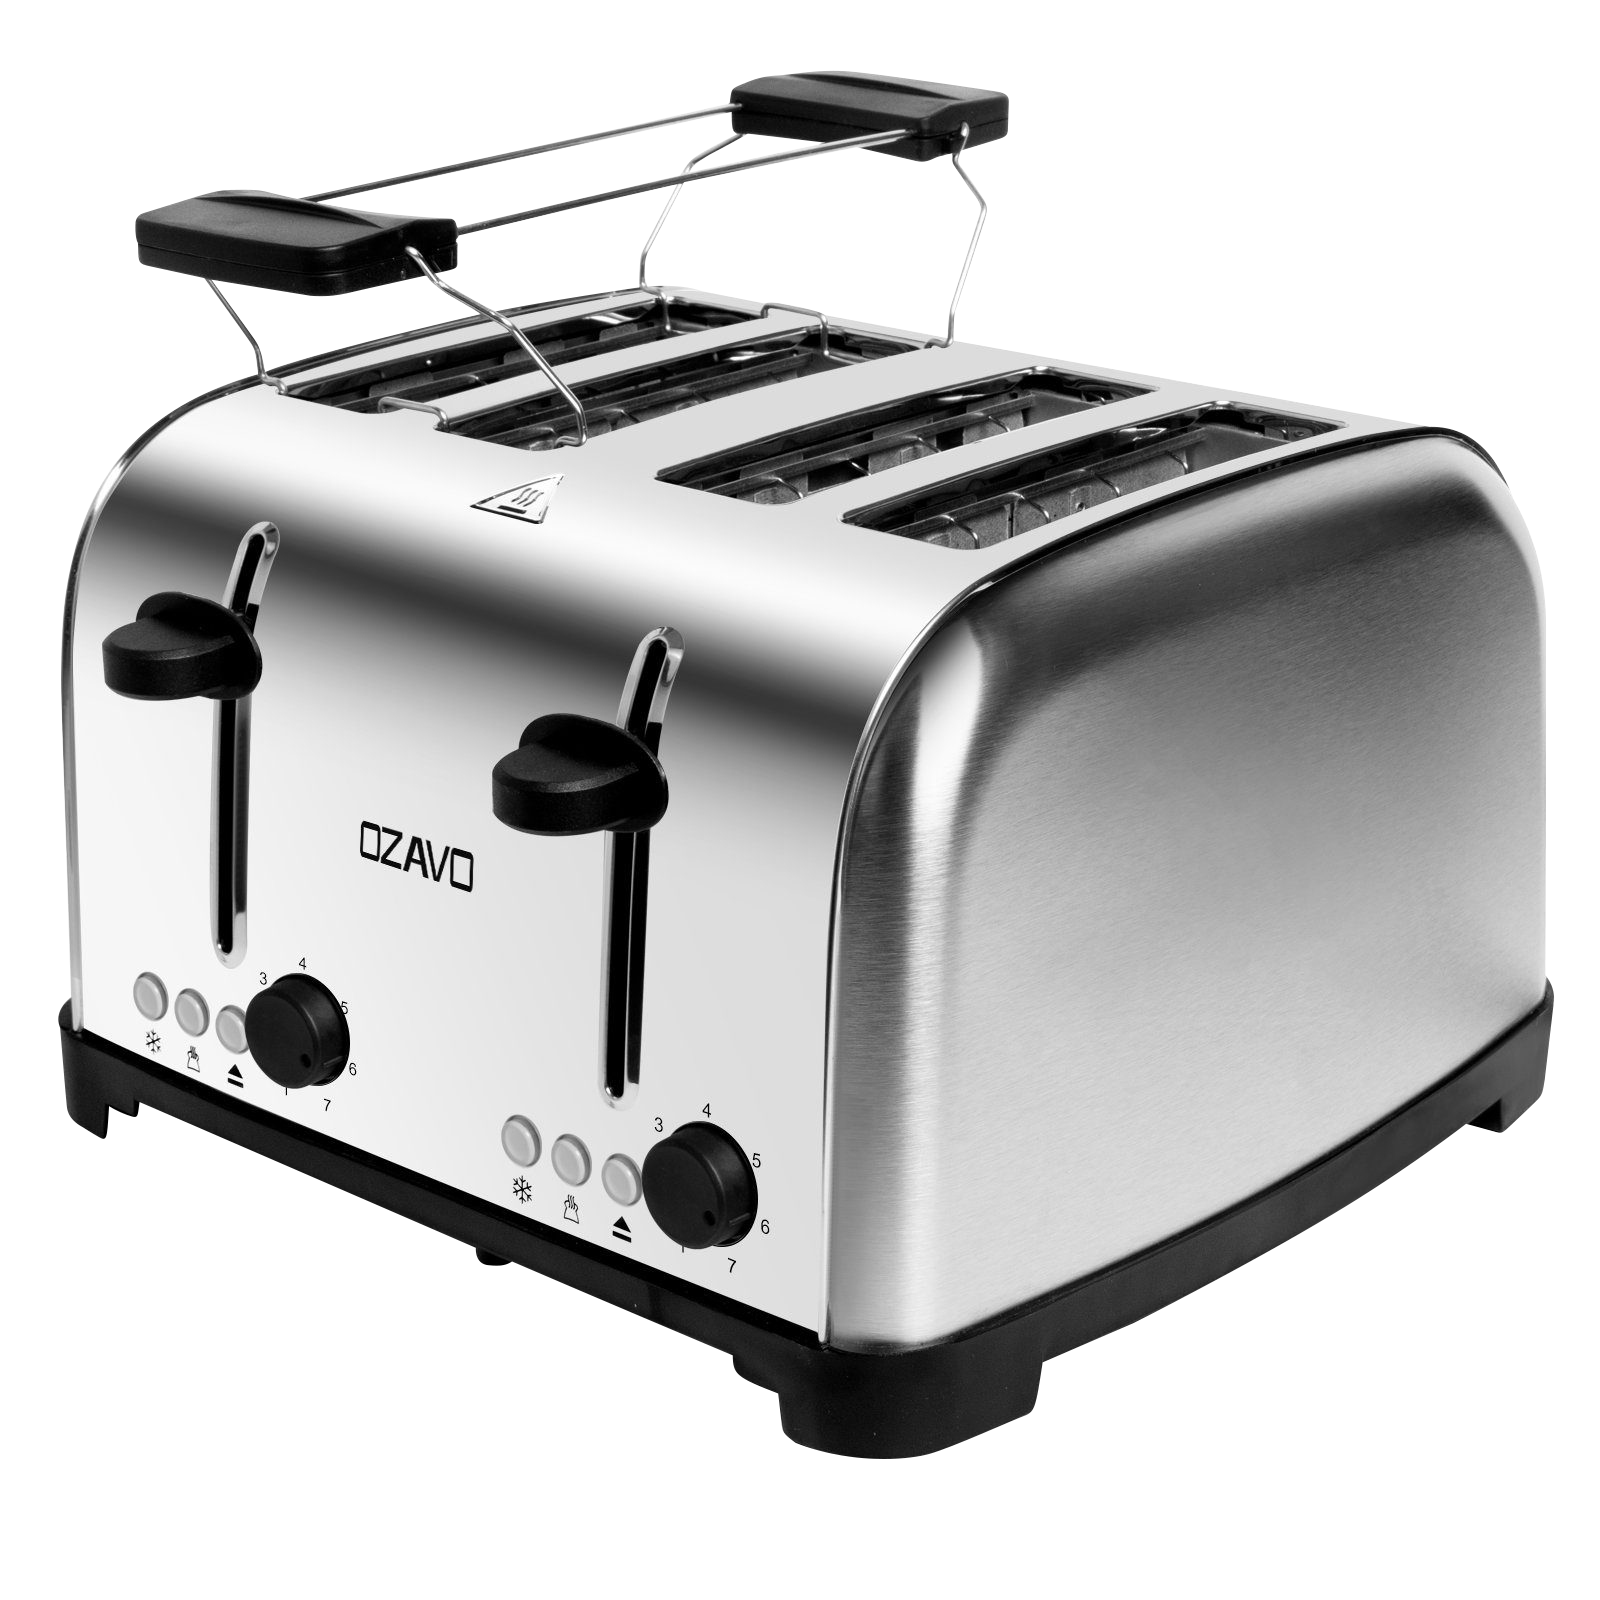 OZAVO OZ331 Toaster Schlitze: Silber Watt, (1700 4)